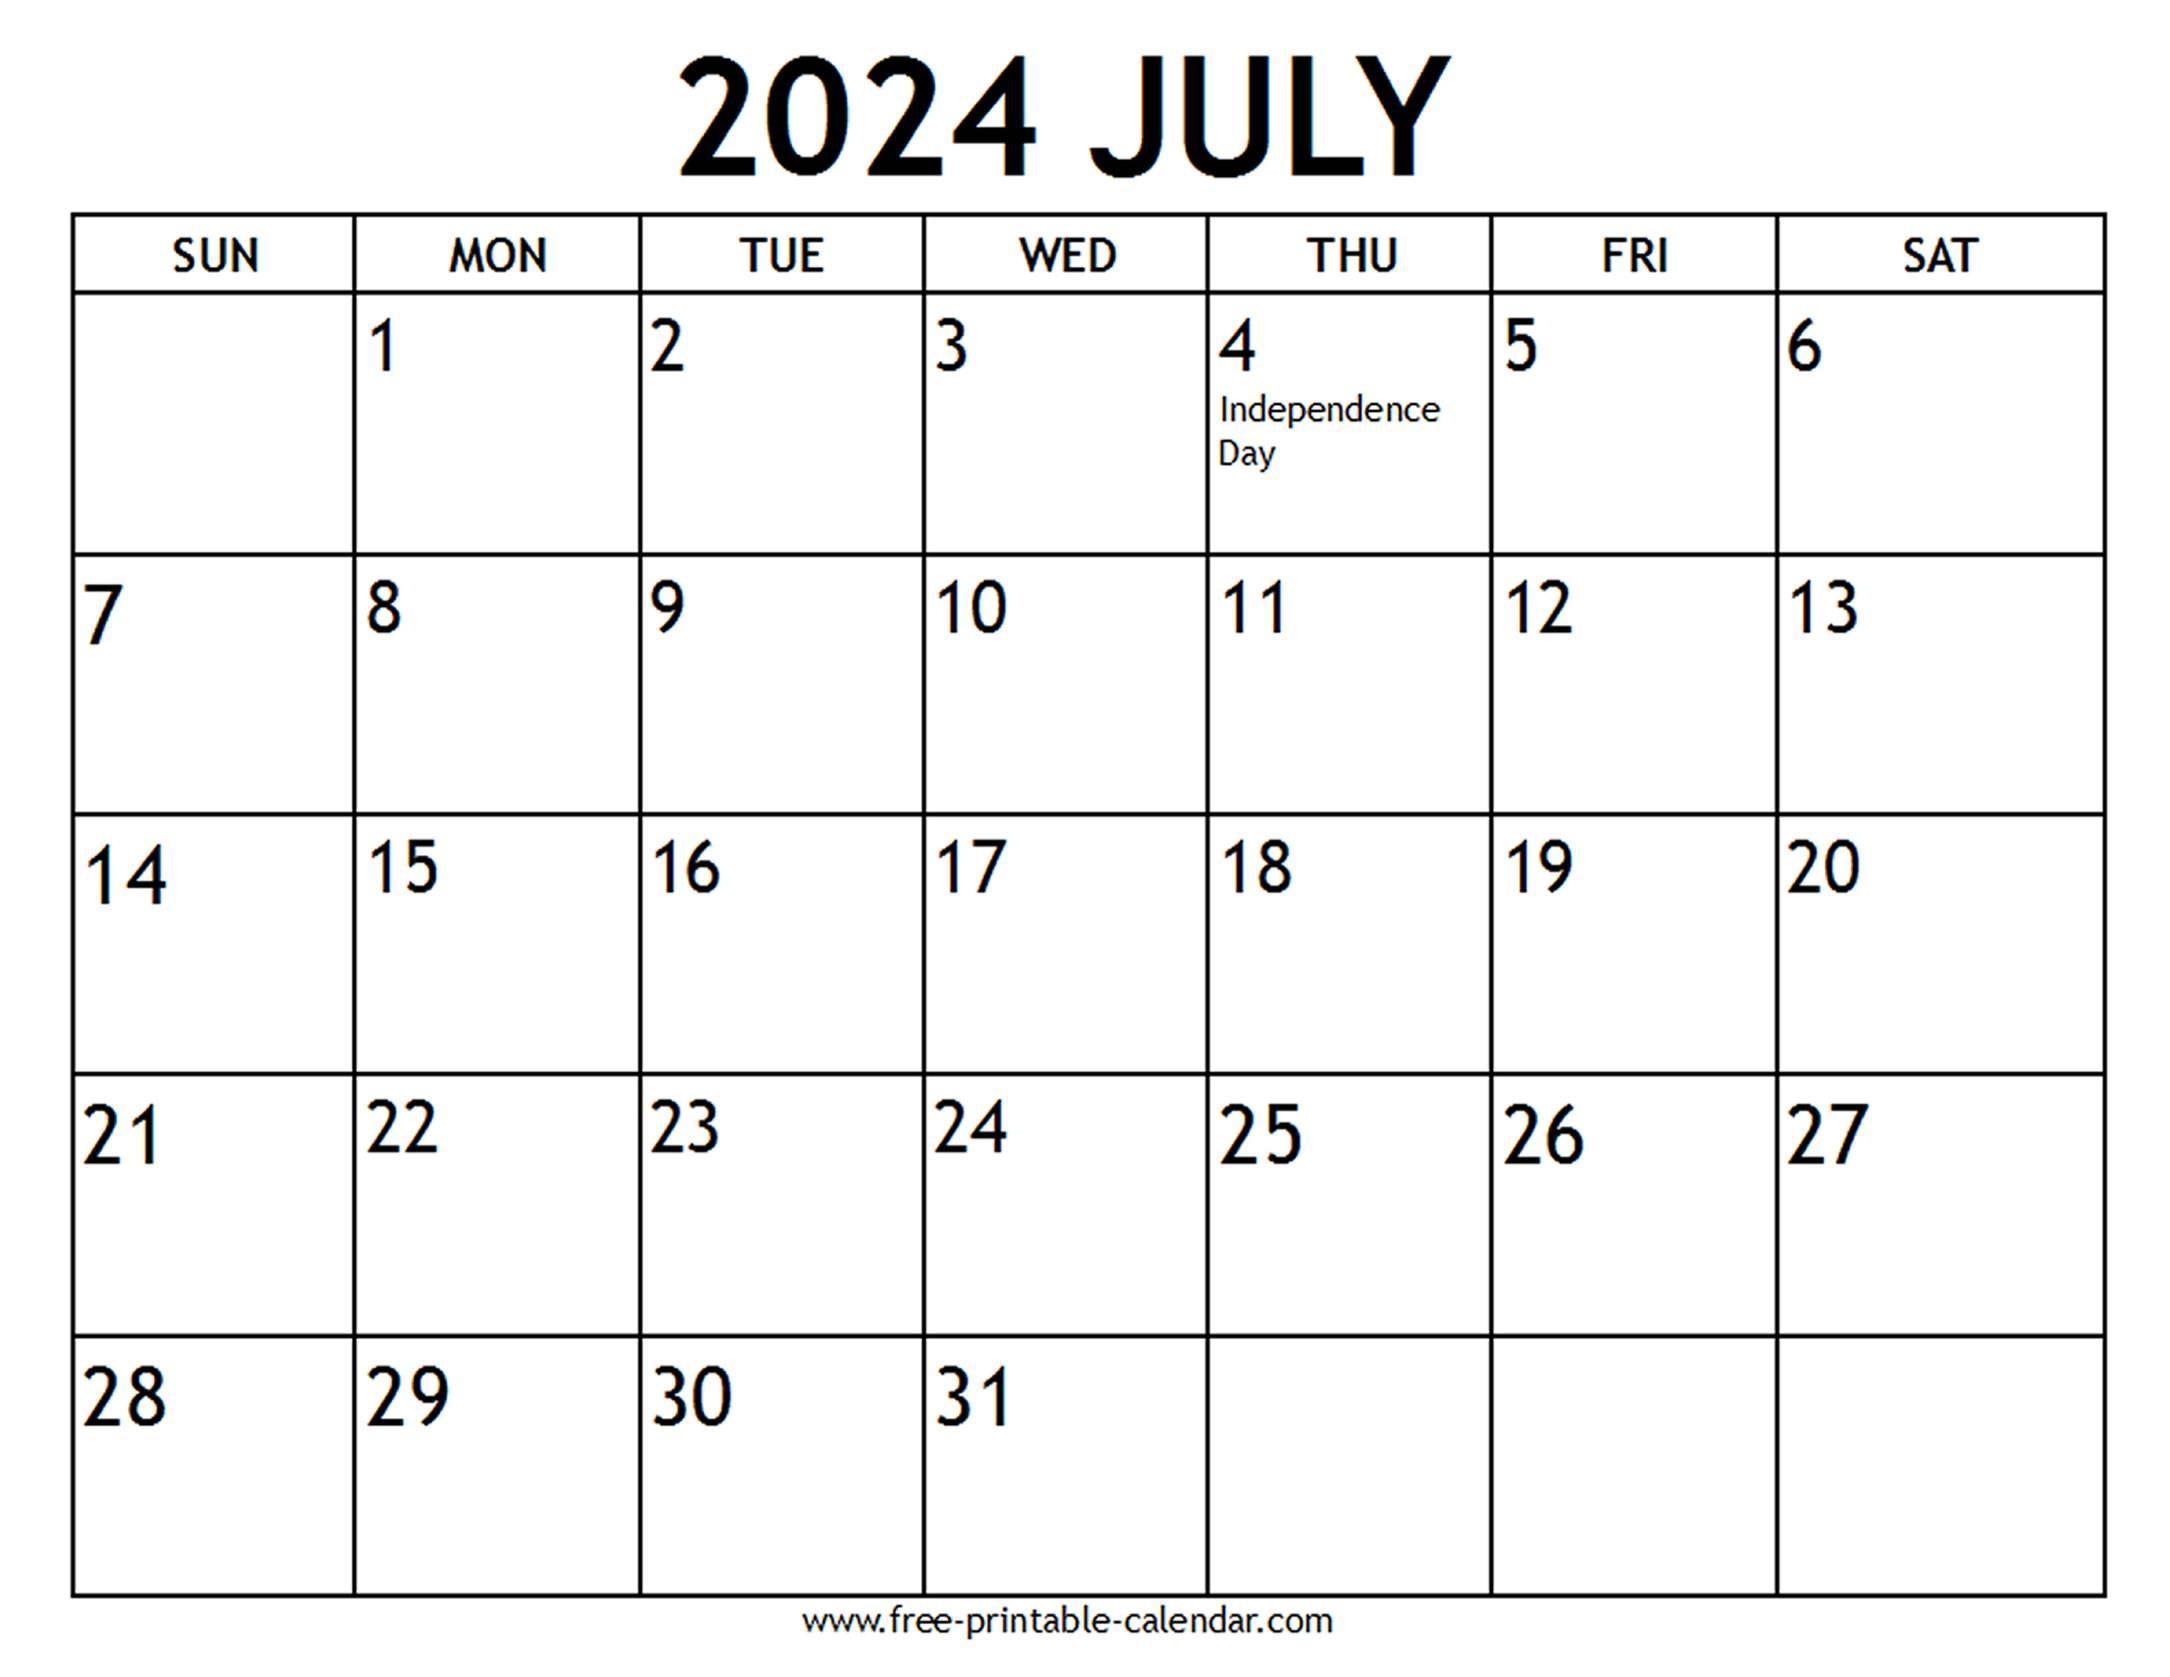 July 2024 Calendar Us Holidays - Free-Printable-Calendar | July 2024 Calendar With Holidays Printable